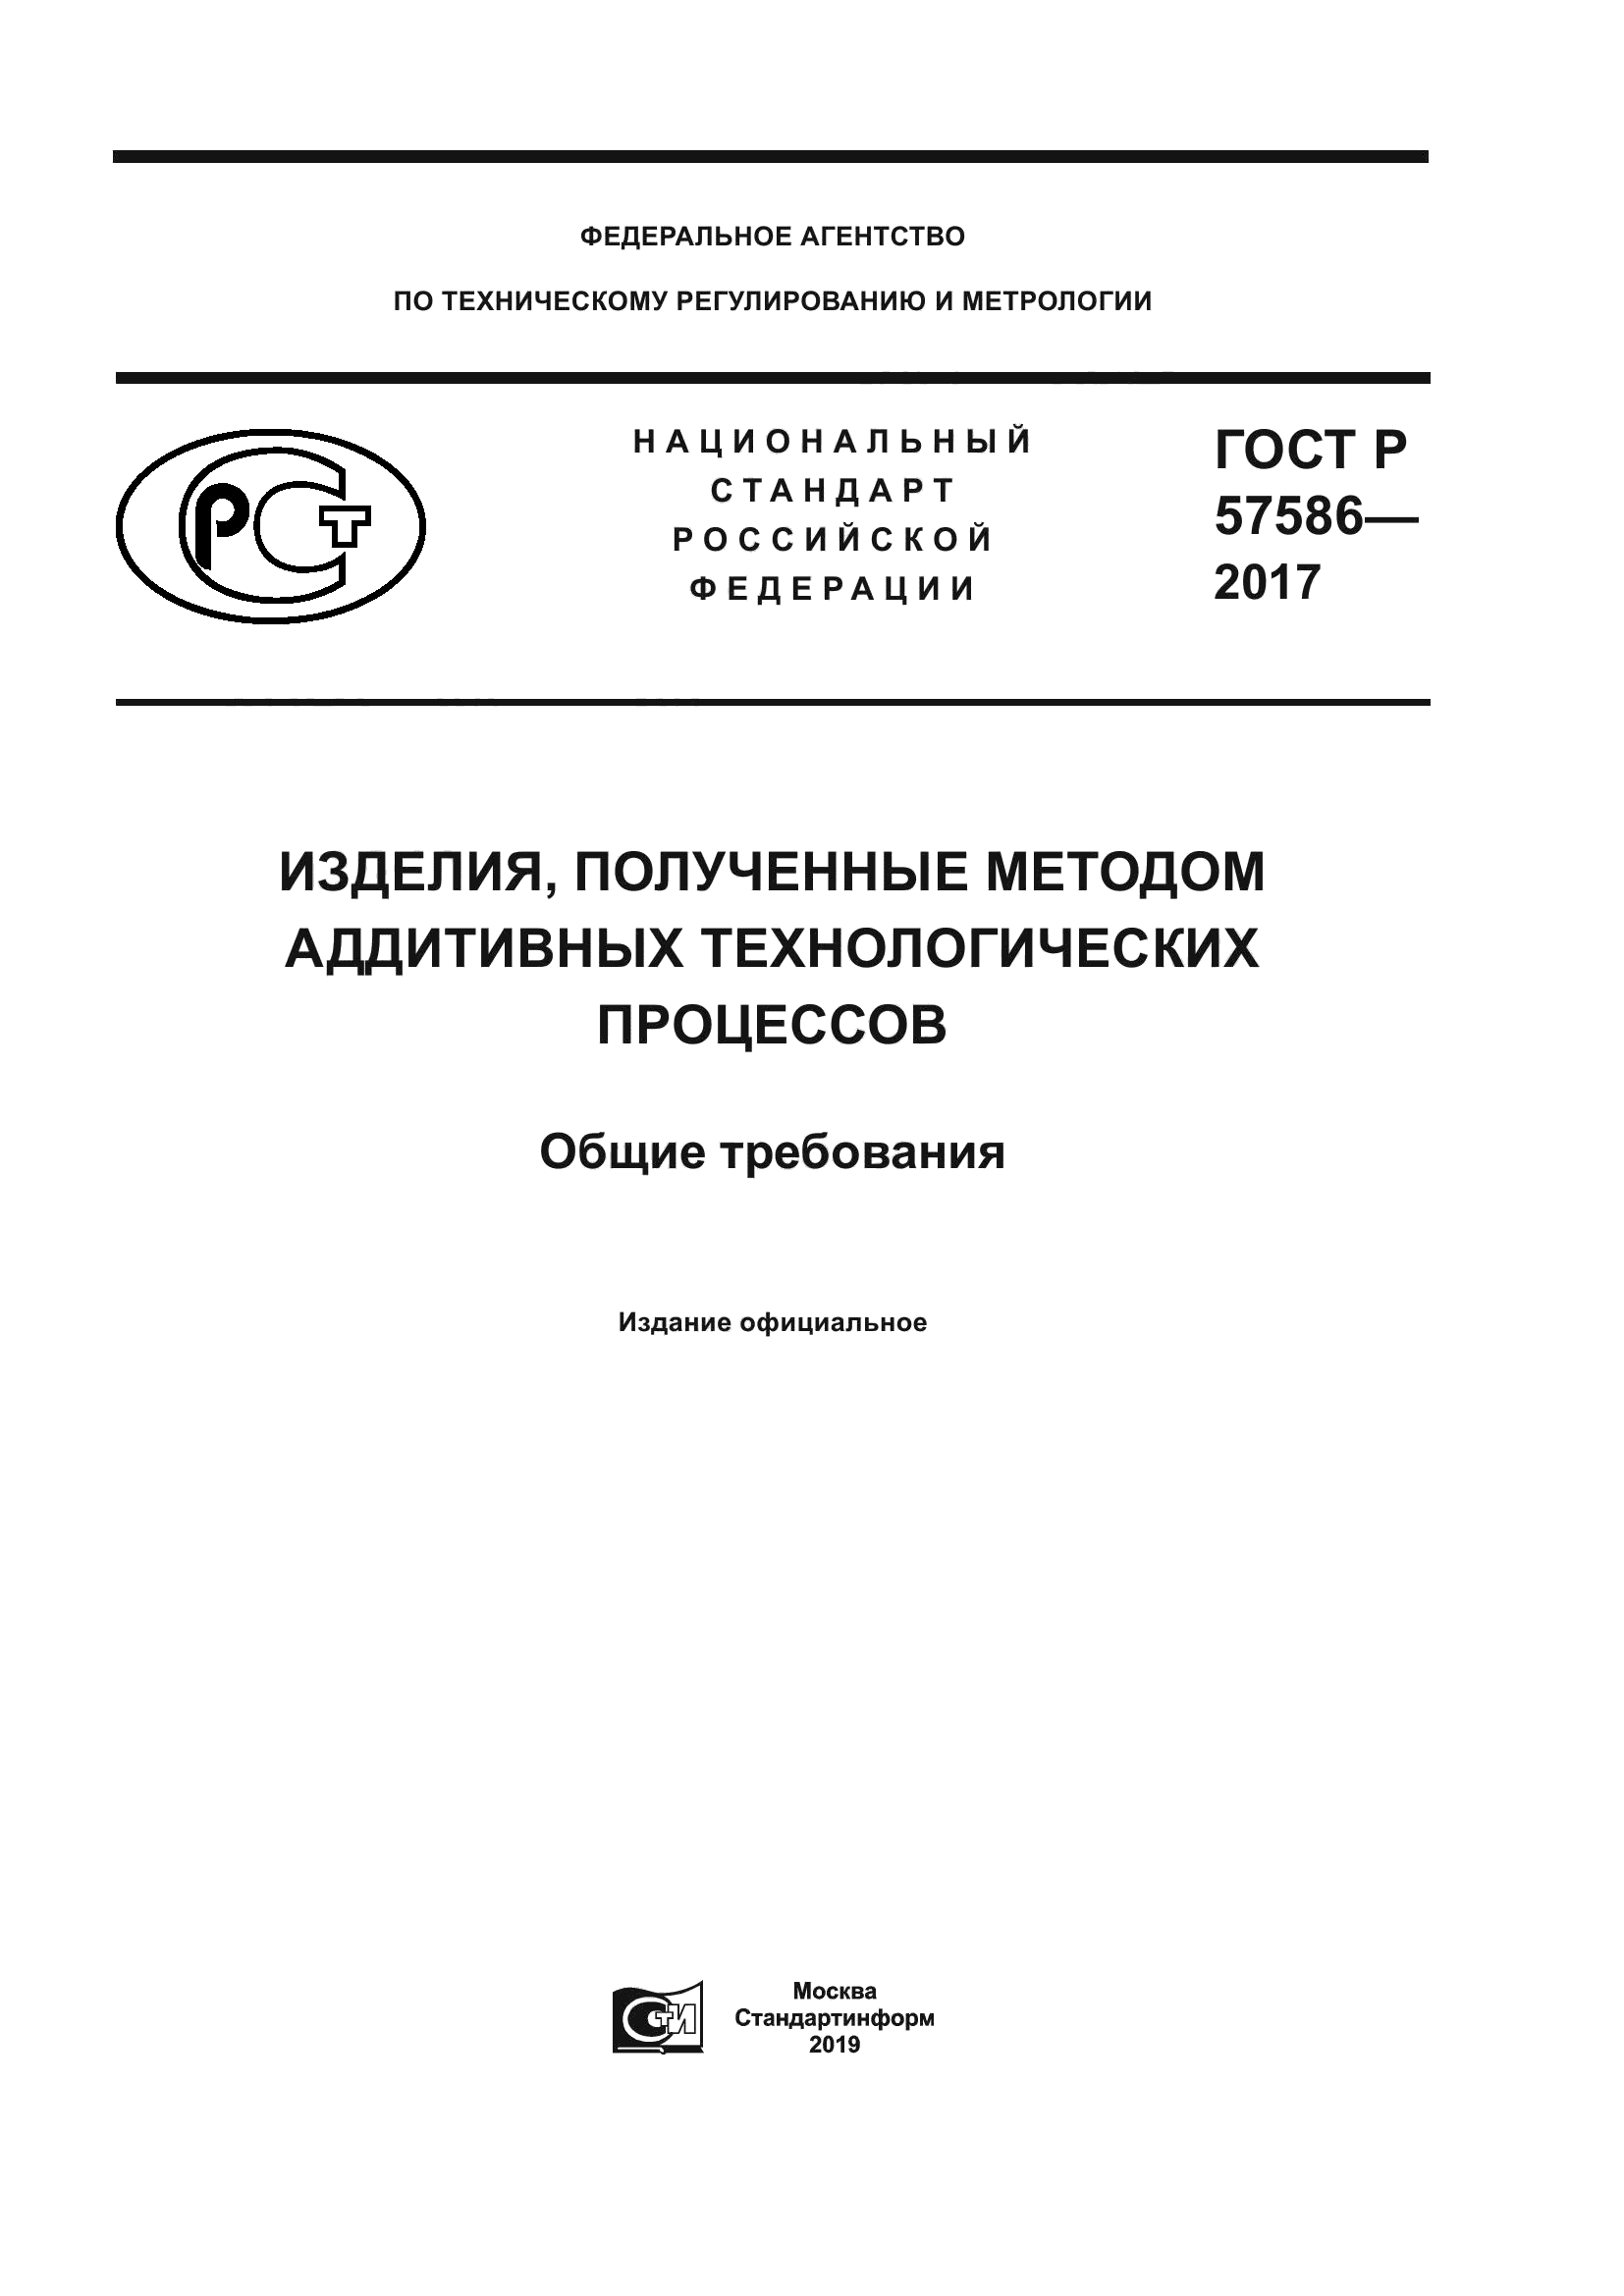 ГОСТ Р 57586-2017